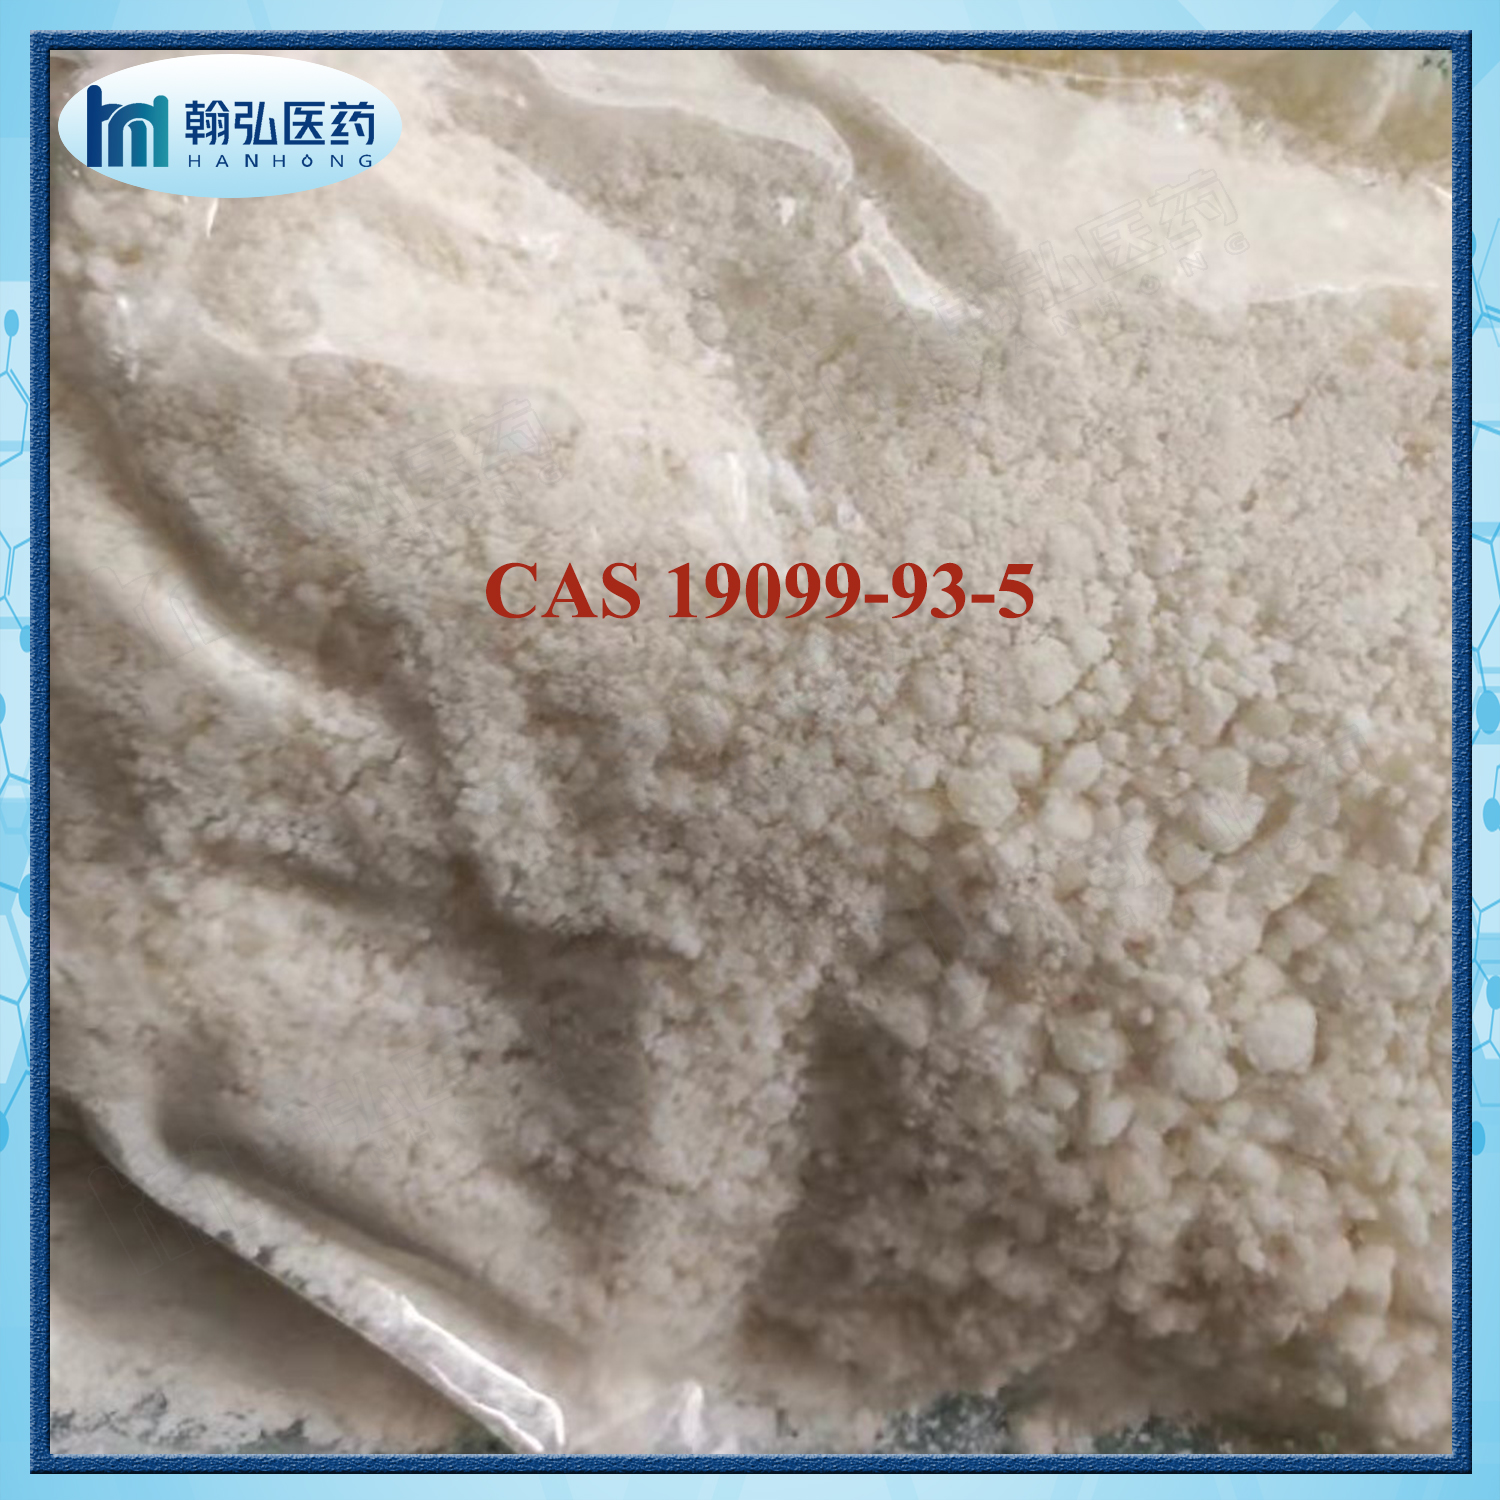 1-(Benzyloxycarbonyl)-4-piperidinone CAS 19099-93-5 Whatsapp / Signal/ Telegram: + 86 15972120223 Wicker: Cynthiahuang111